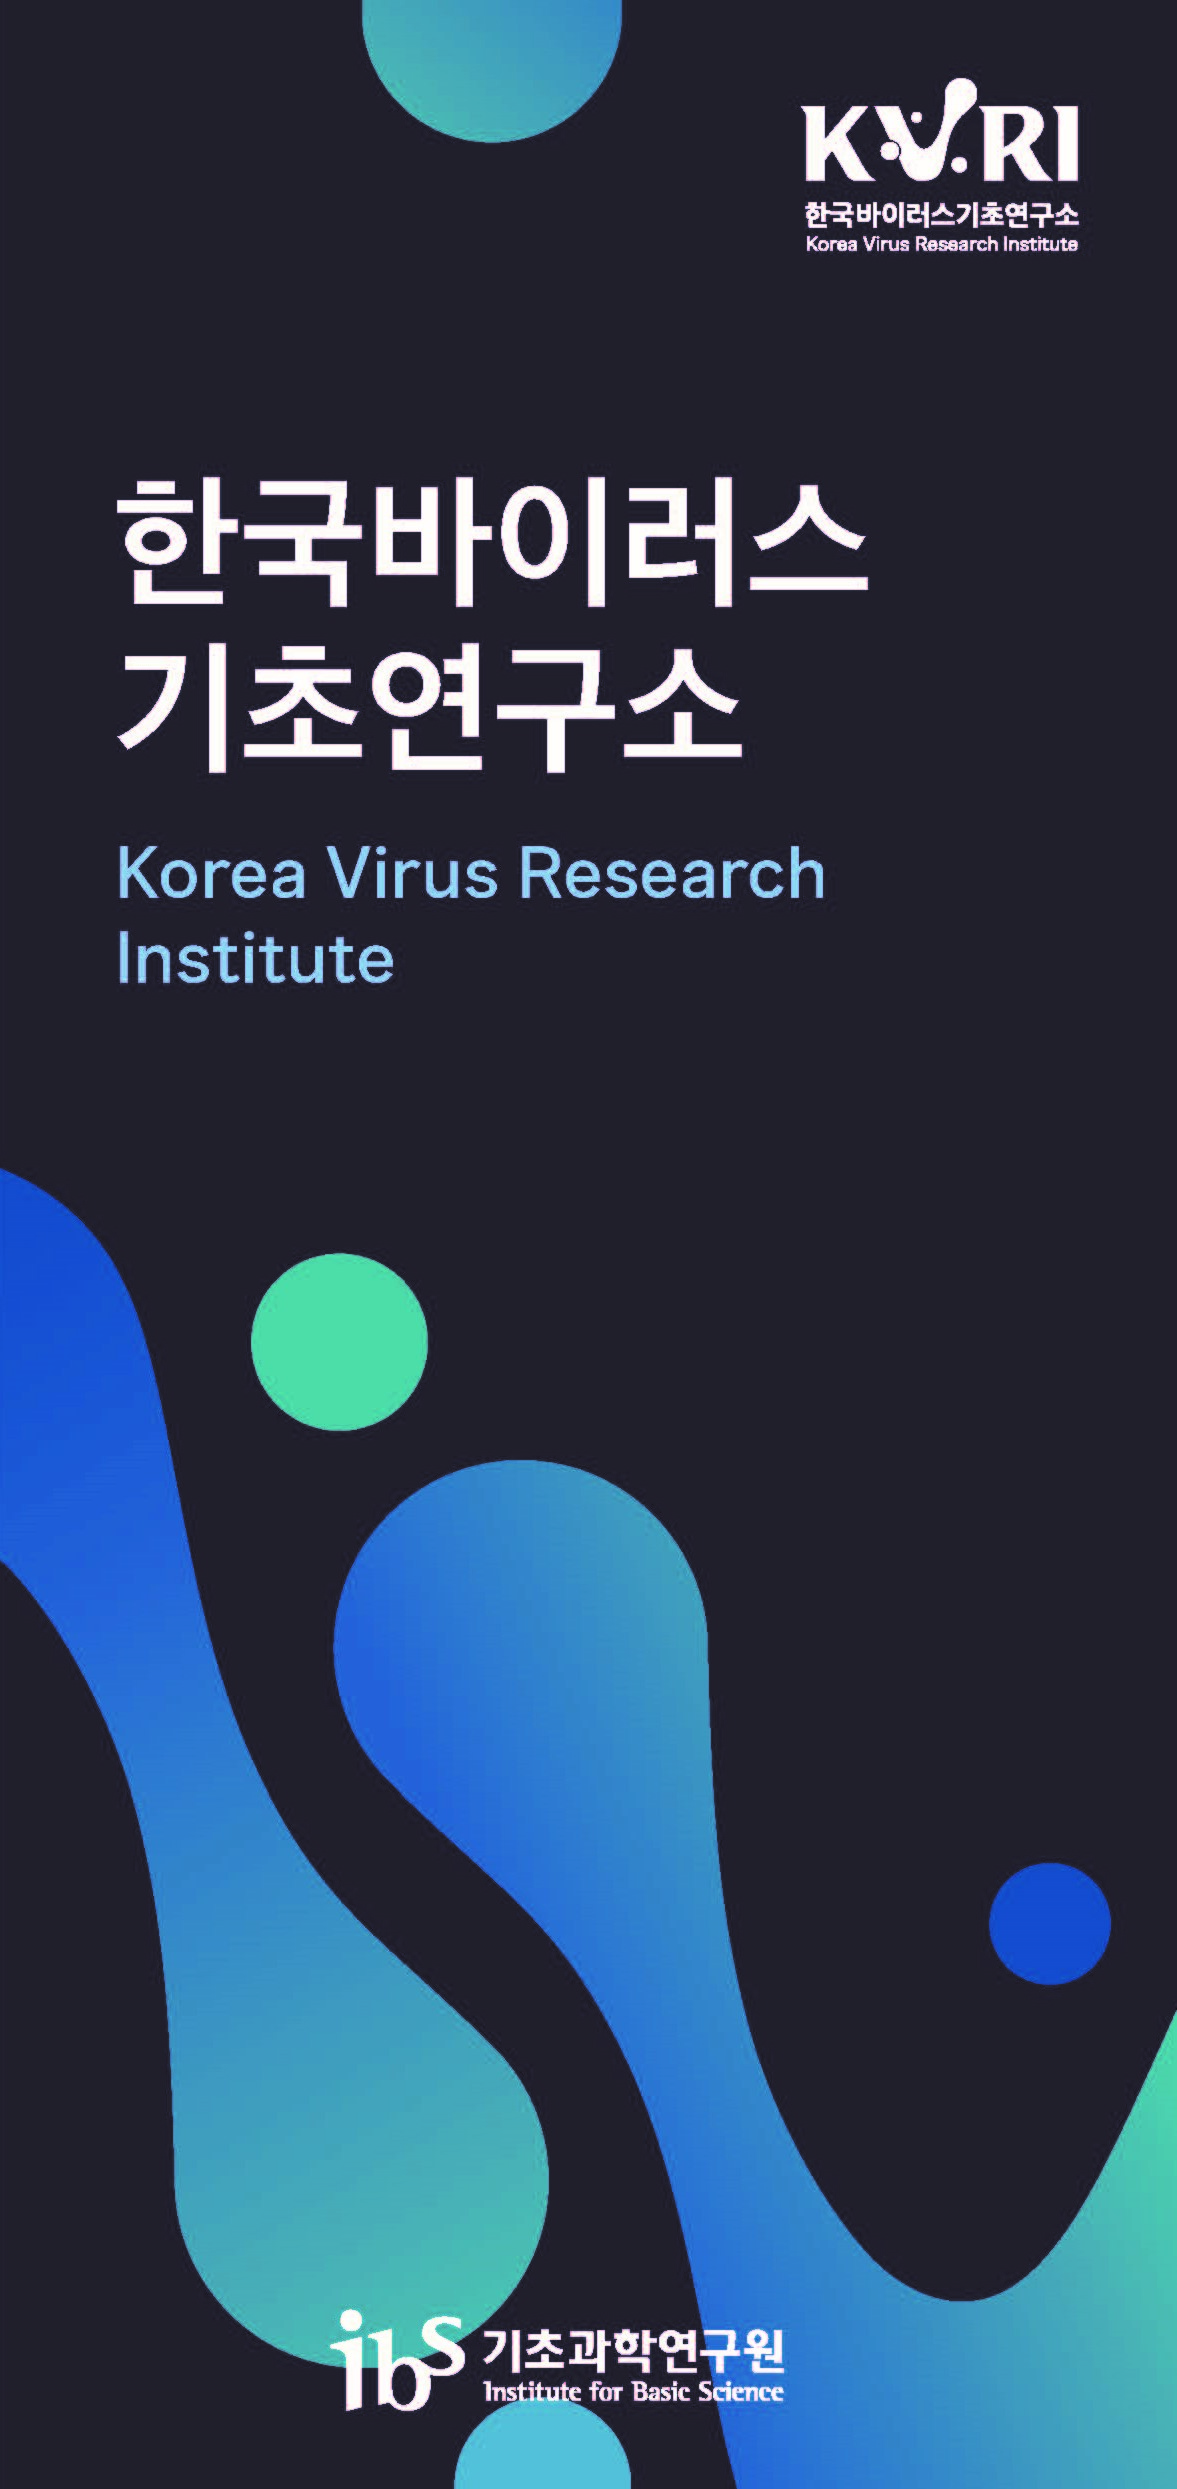 KOREA VIRUS RESEARCH INSTITUTE Leaflet(Kor ver.) 사진